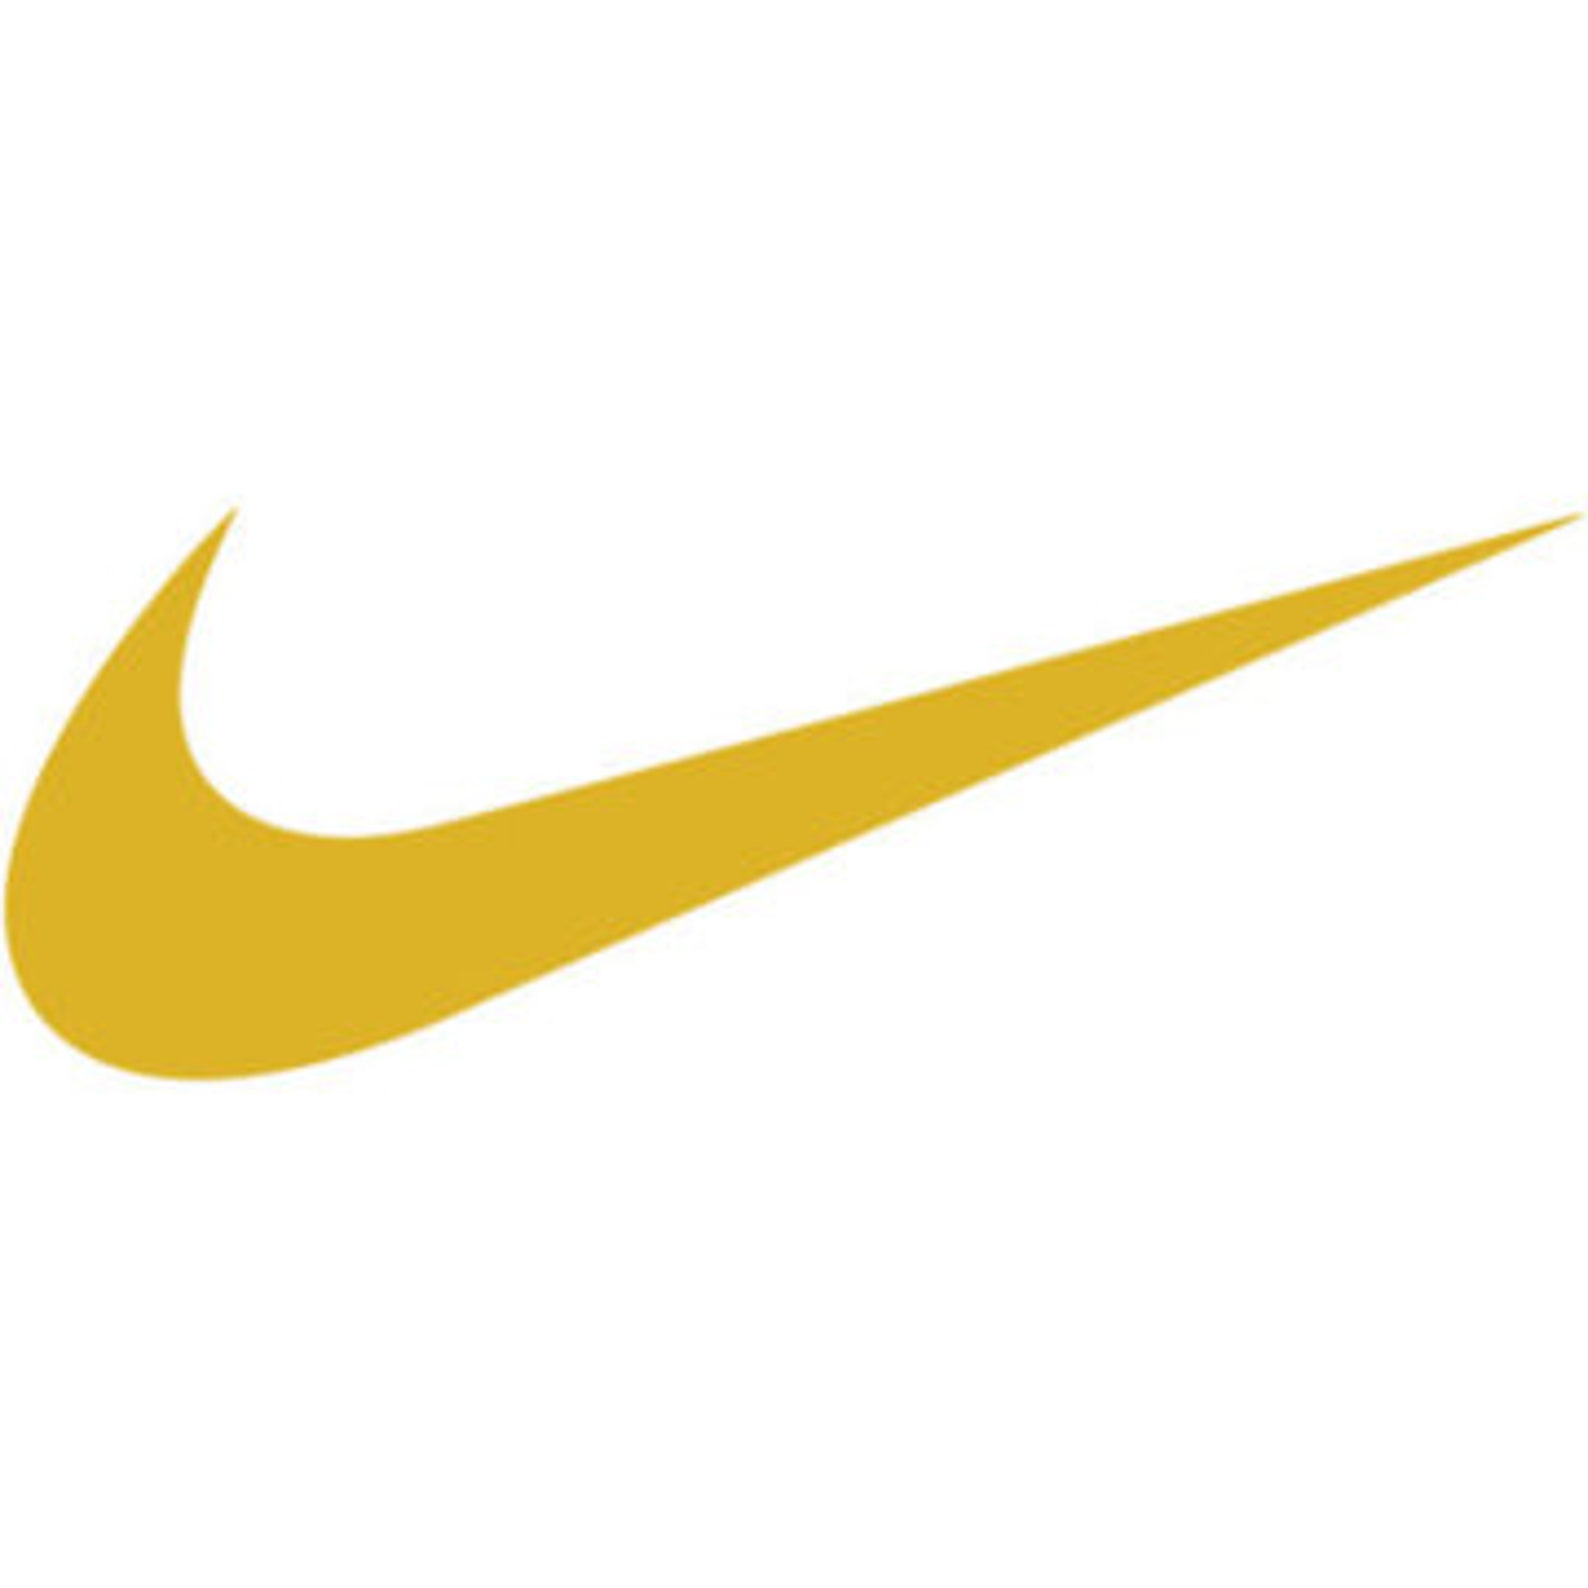 Nike Check Mark Swoosh decal logo sticker | Etsy